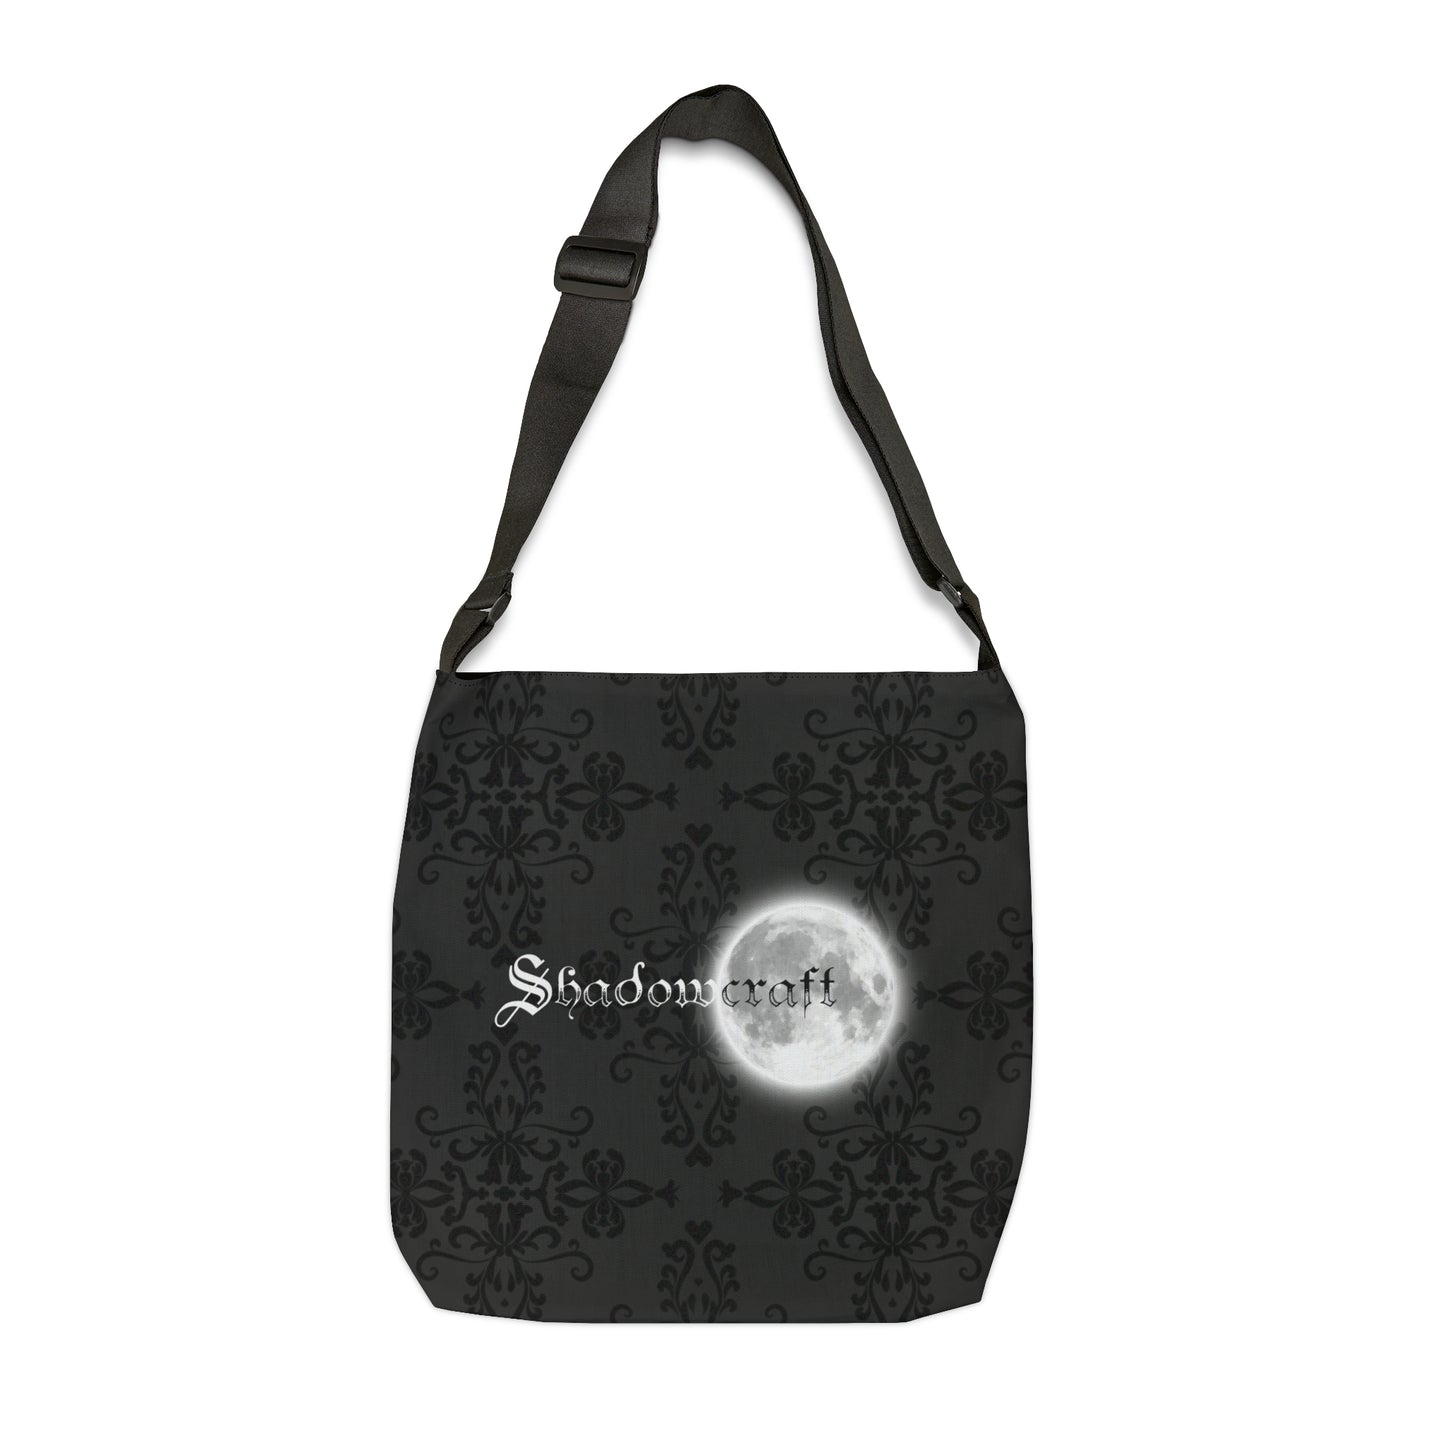 Shadowcraft | Adjustable Tote Bag